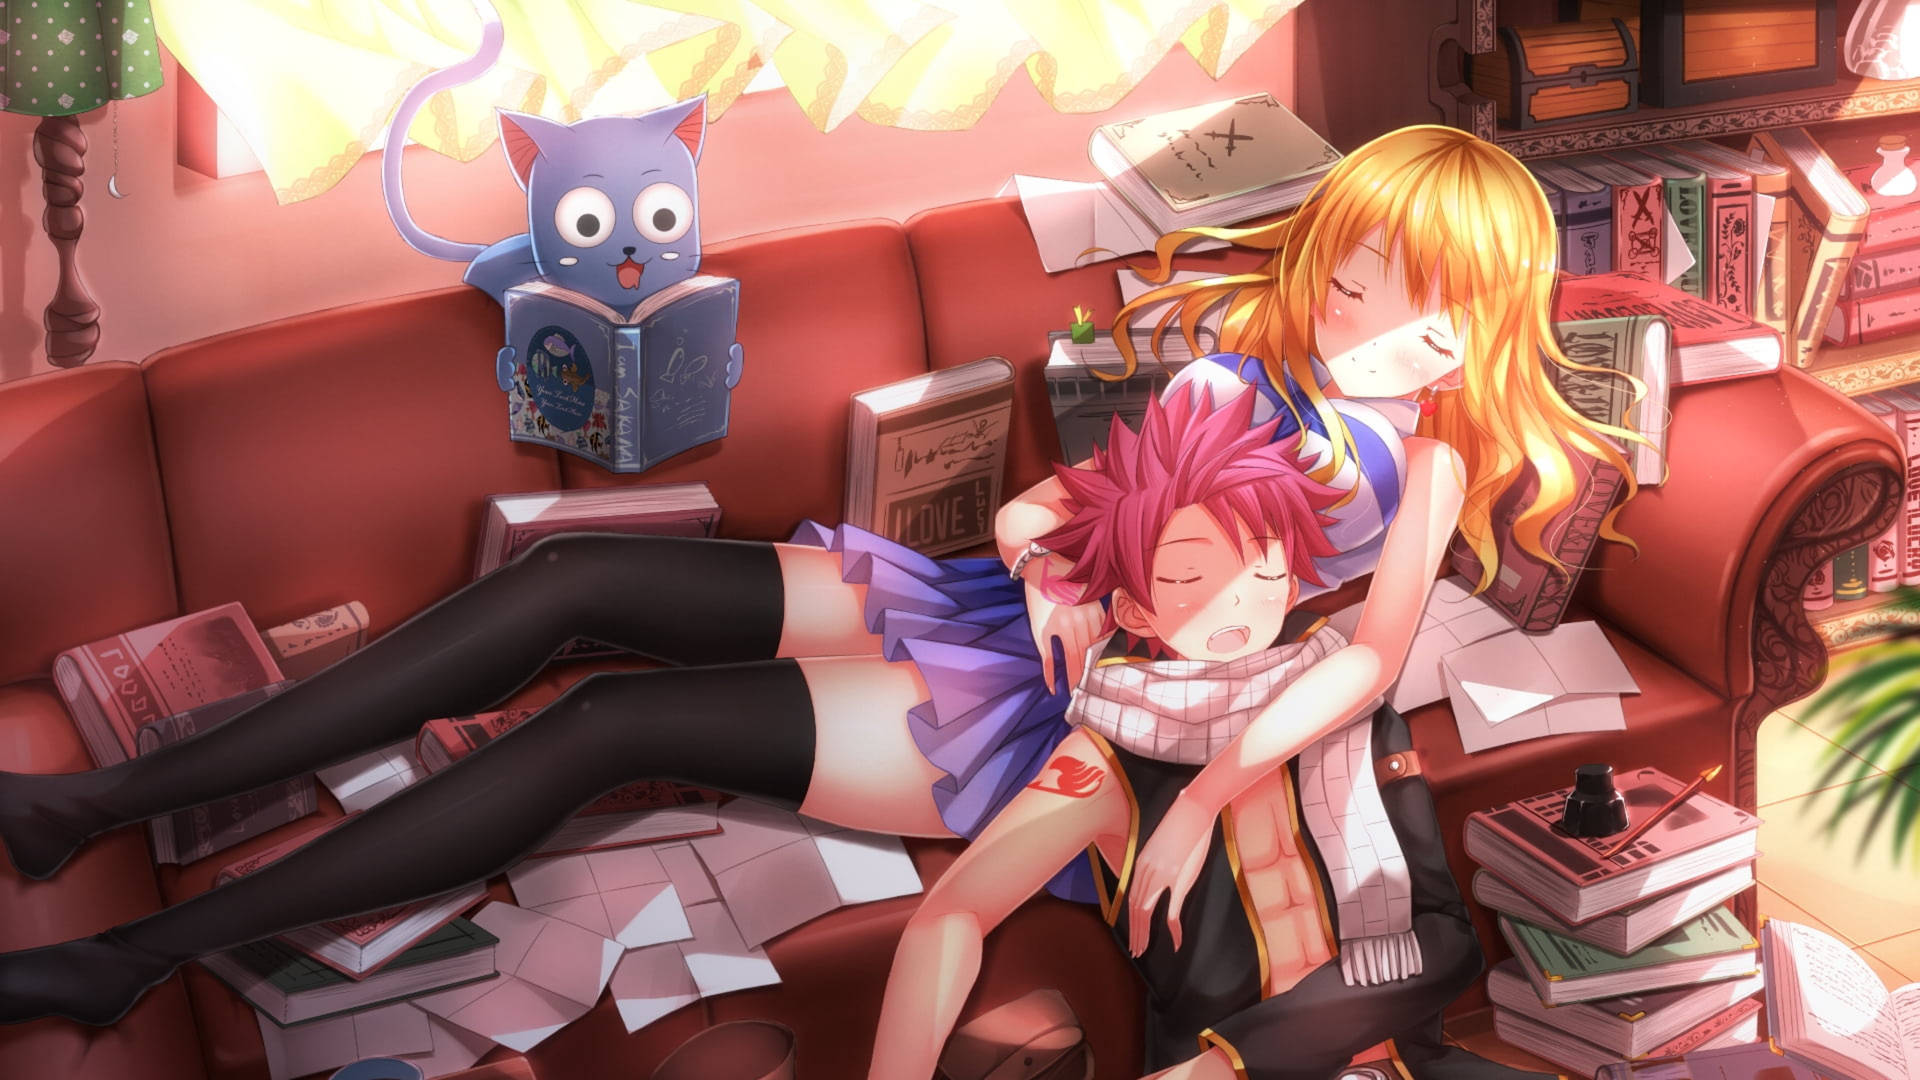 Cute Anime Couple Sleeping On Couch